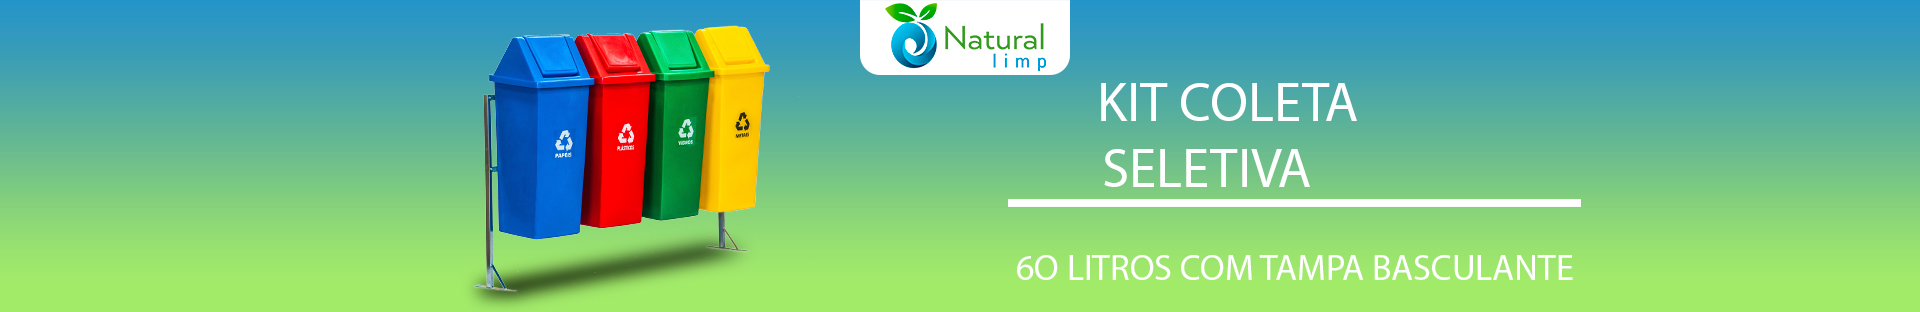 Natural Limp - kit coleta seletiva